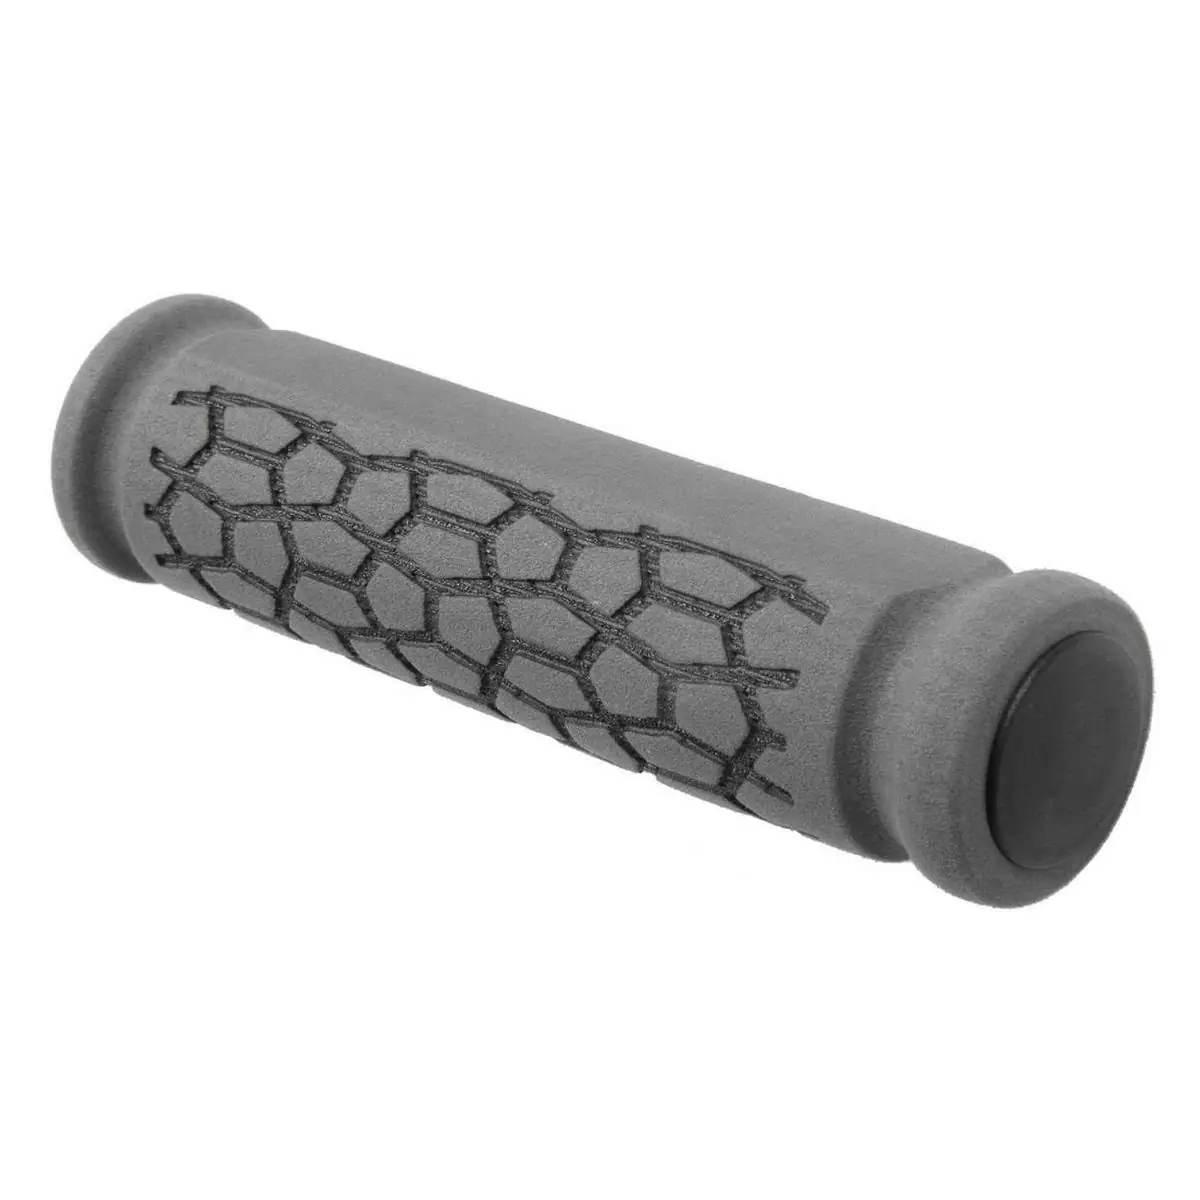 pair grips high quality nano foam grey 130mm - image